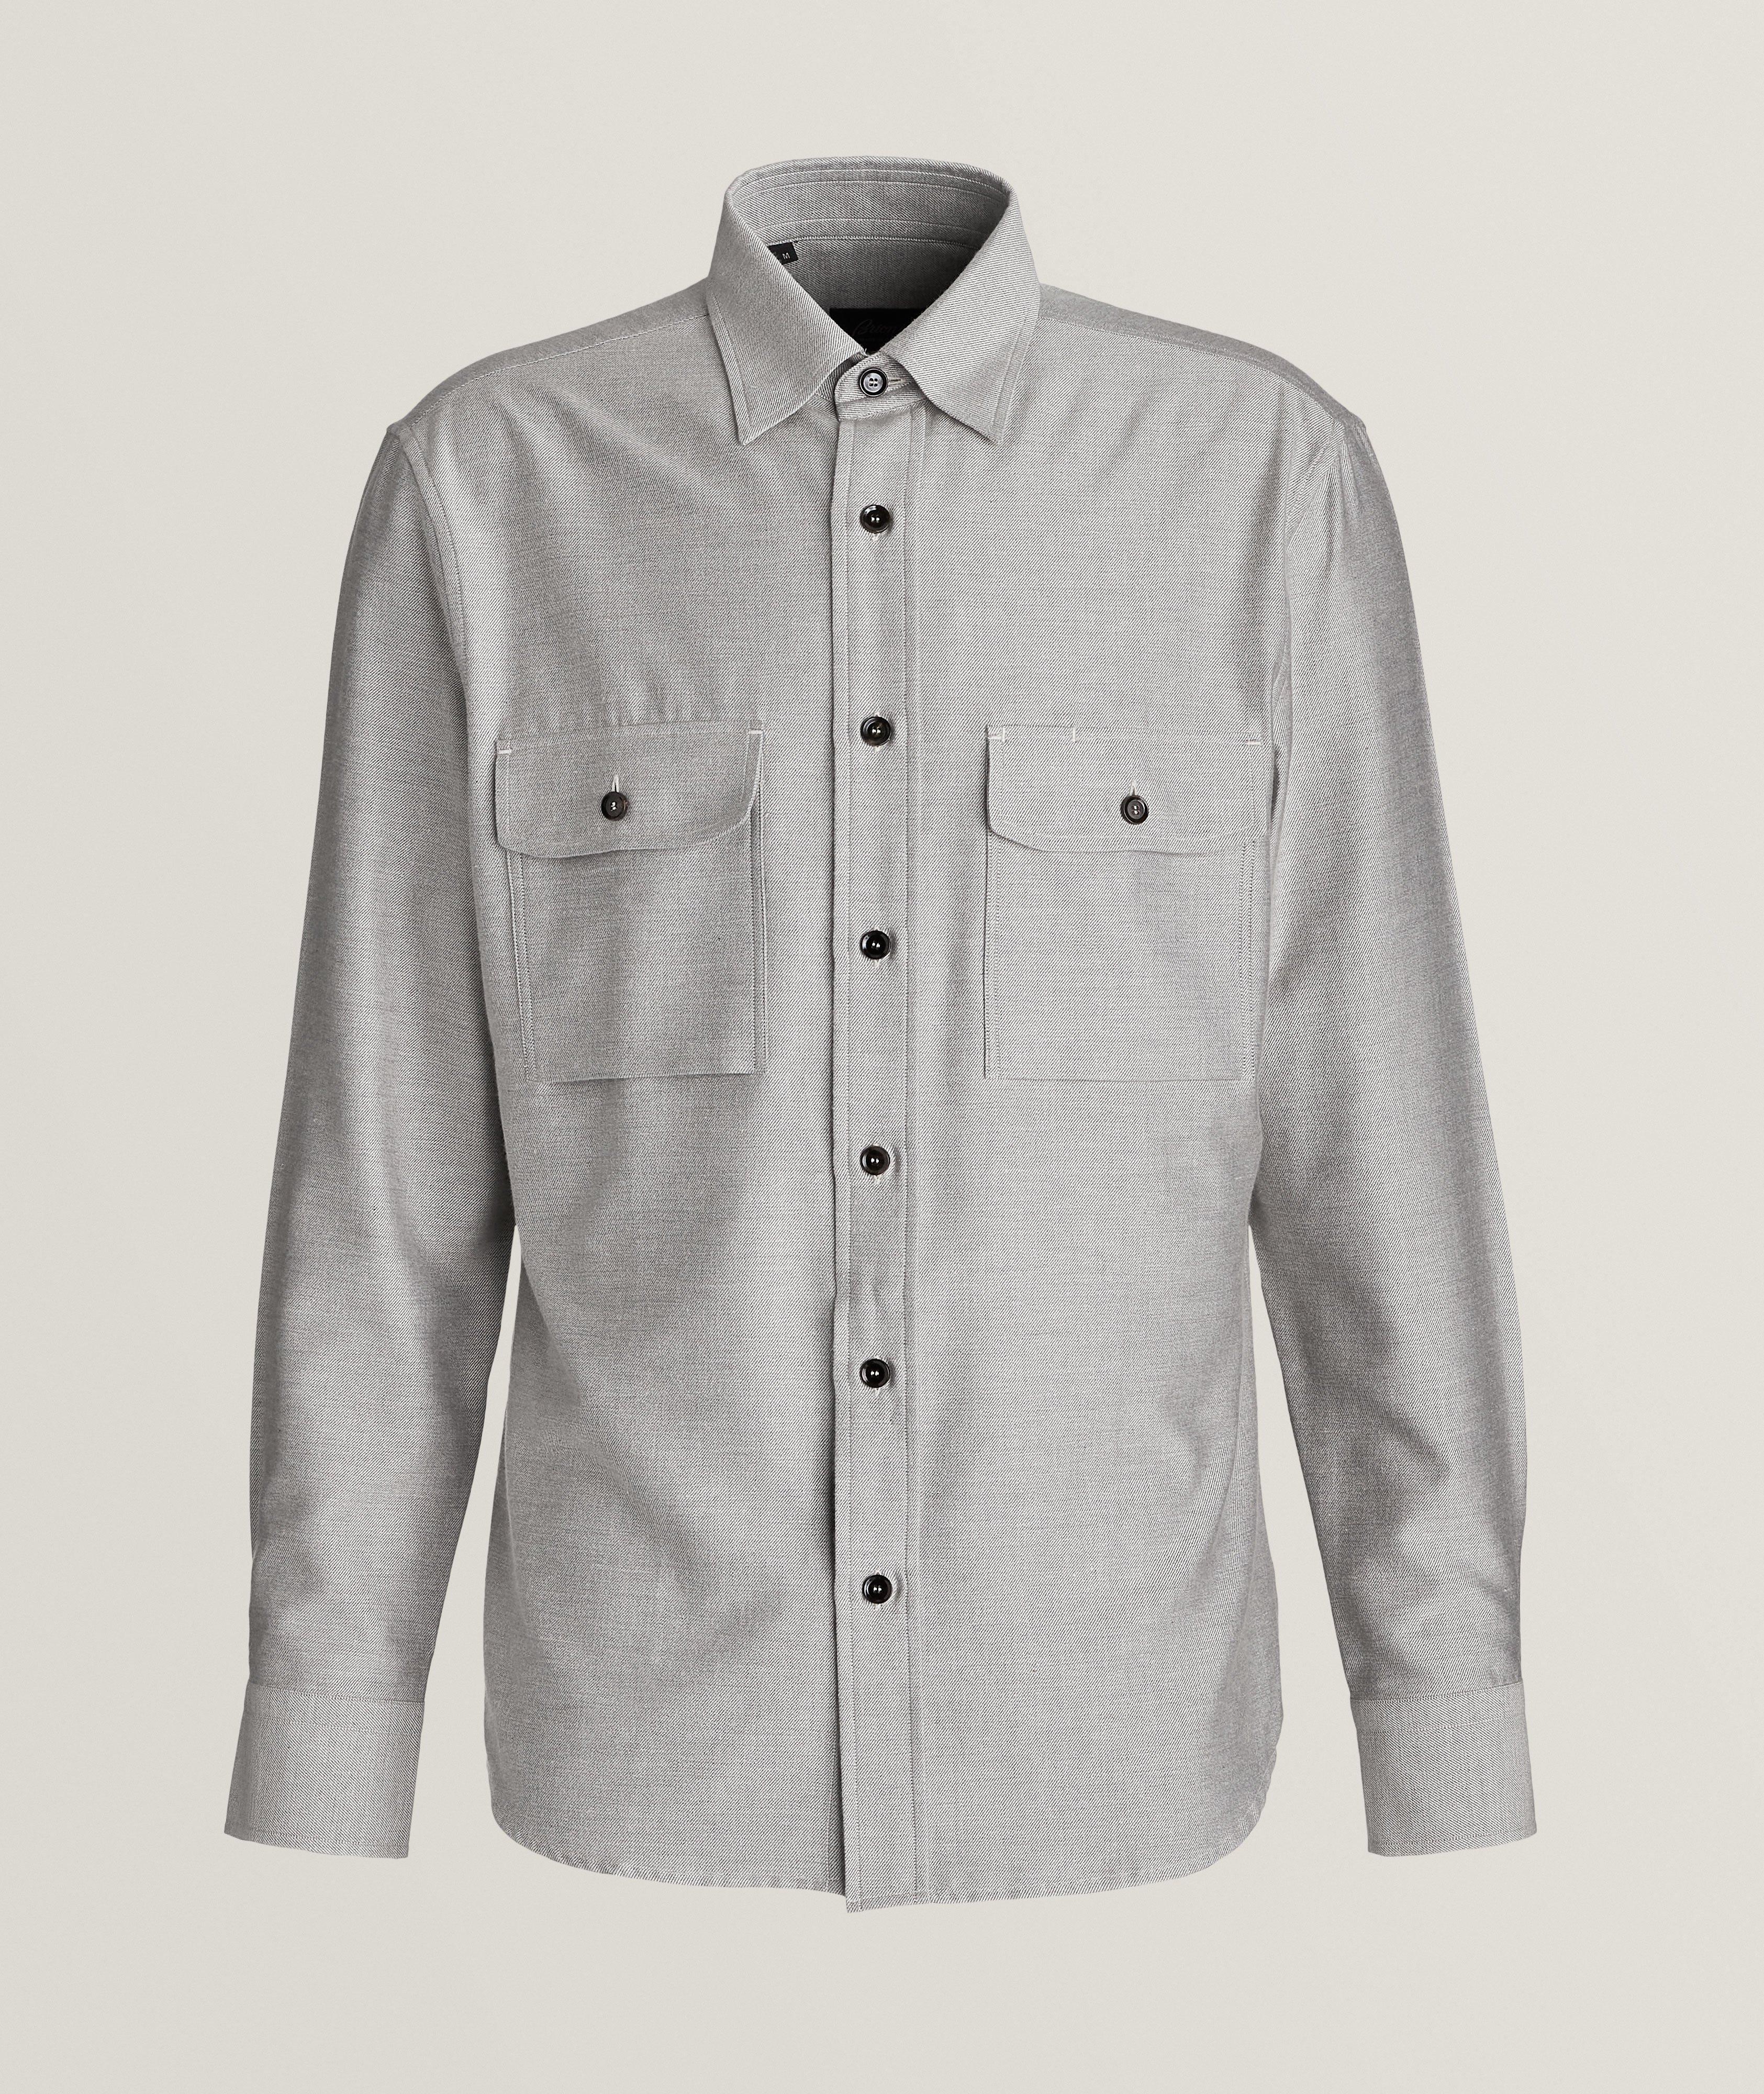 Cotton-Cashmere Military Overshirt image 0